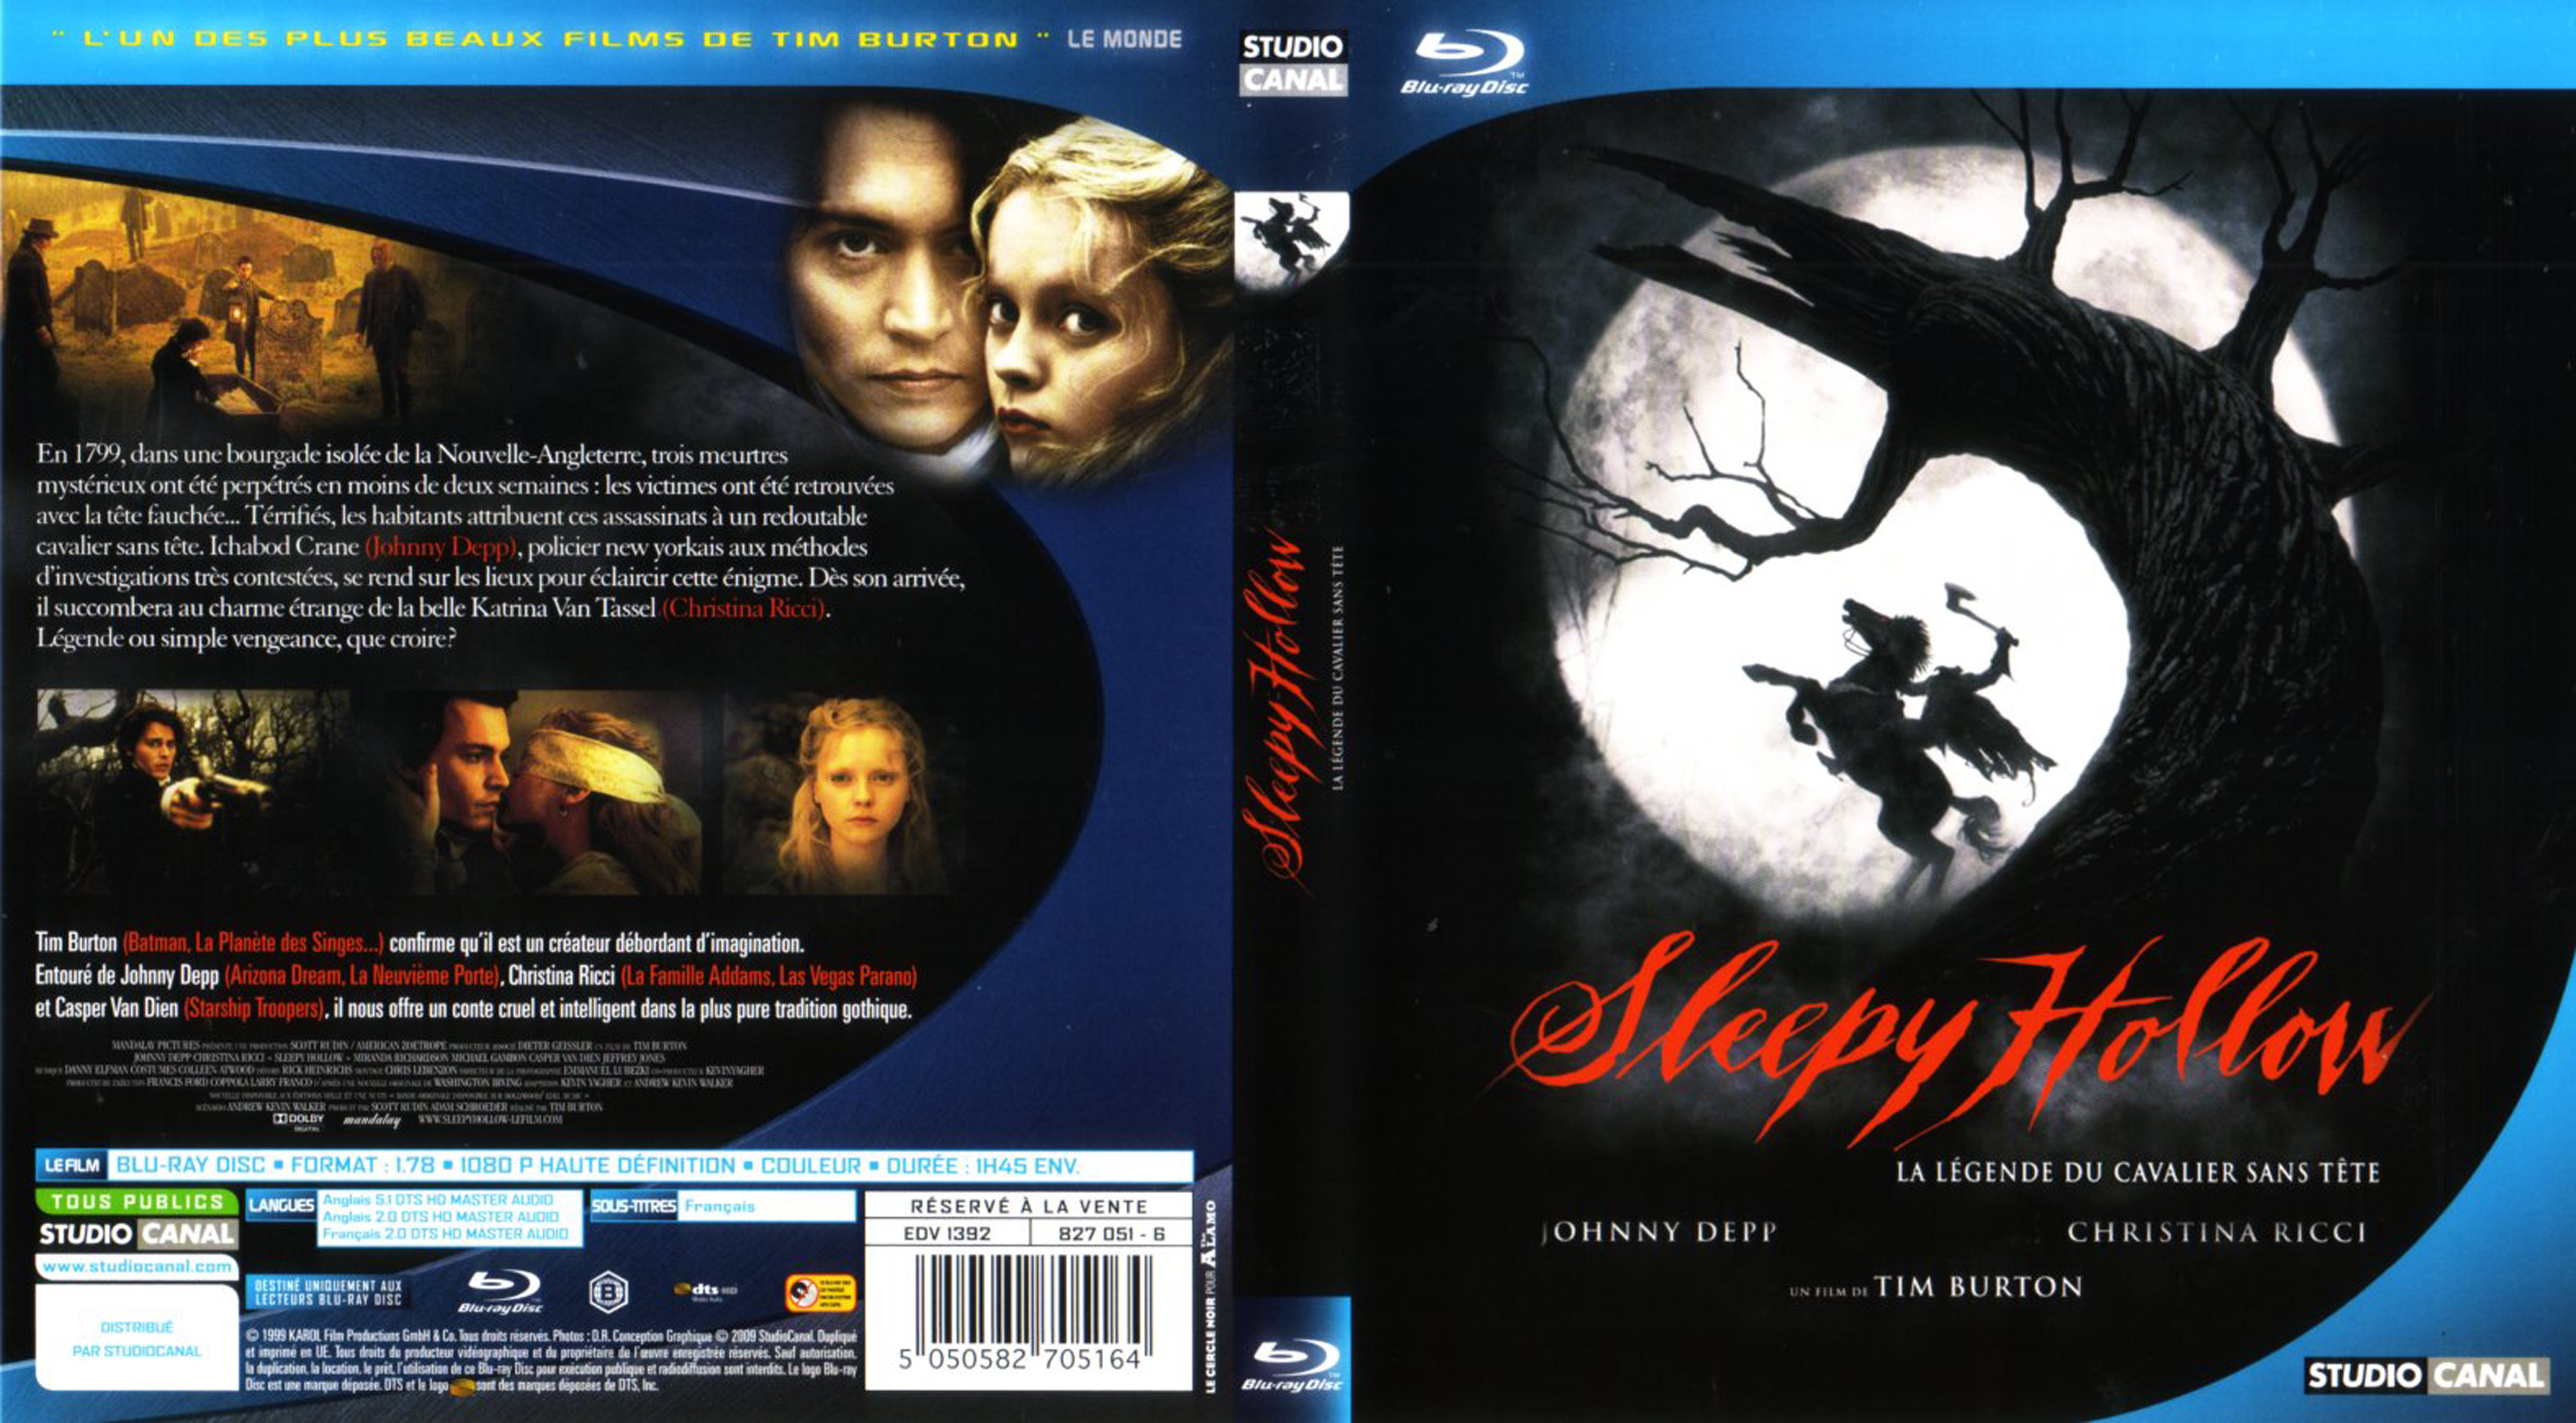 Jaquette DVD Sleepy hollow (BLU-RAY)